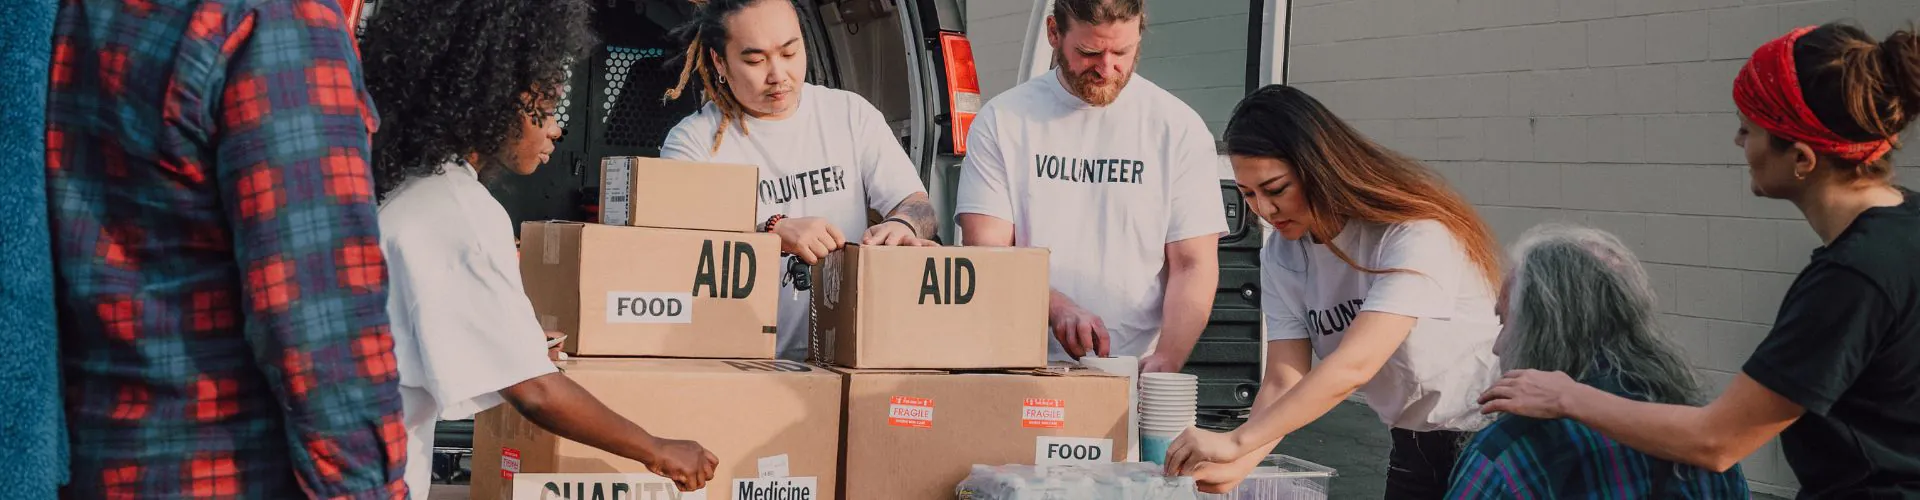 wolontariusze i pomoc humanitarna 